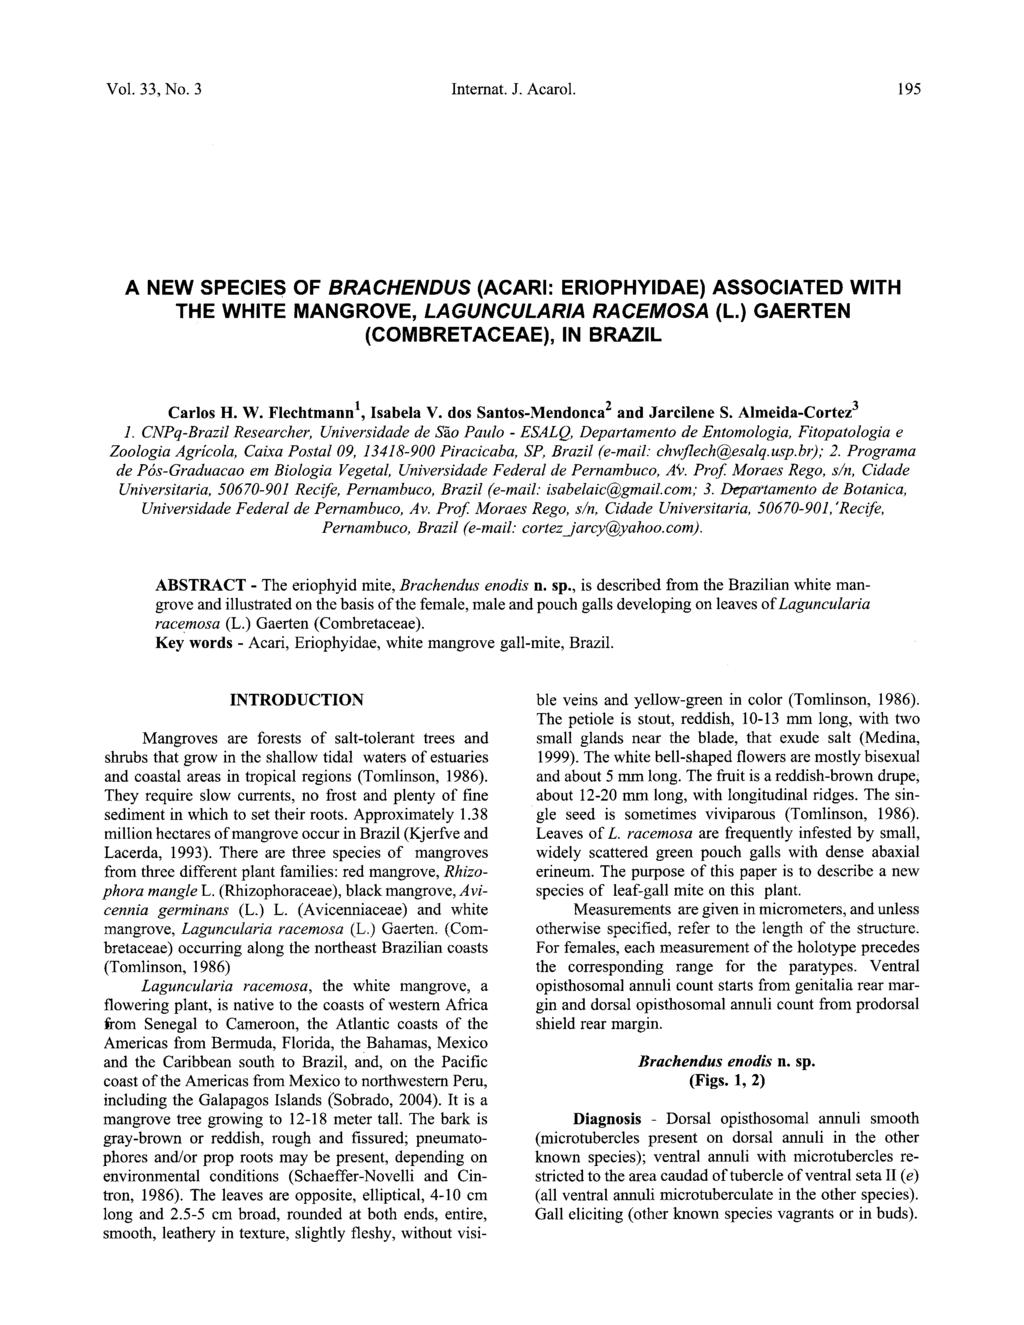 Vol. 33, No. 3 Internat. J. Acarol. 195 A NEW SPECIES OF BRACHENDUS (ACARI: ERIOPHYIDAE) ASSOCIATED WITH THE WHITE MANGROVE, LAGUNCULARIA RACEMOSA (L.) GAERTEN (COMBRETACEAE), IN BRAZIL Carlos H. W. Flechtmann 1, Isabela V.